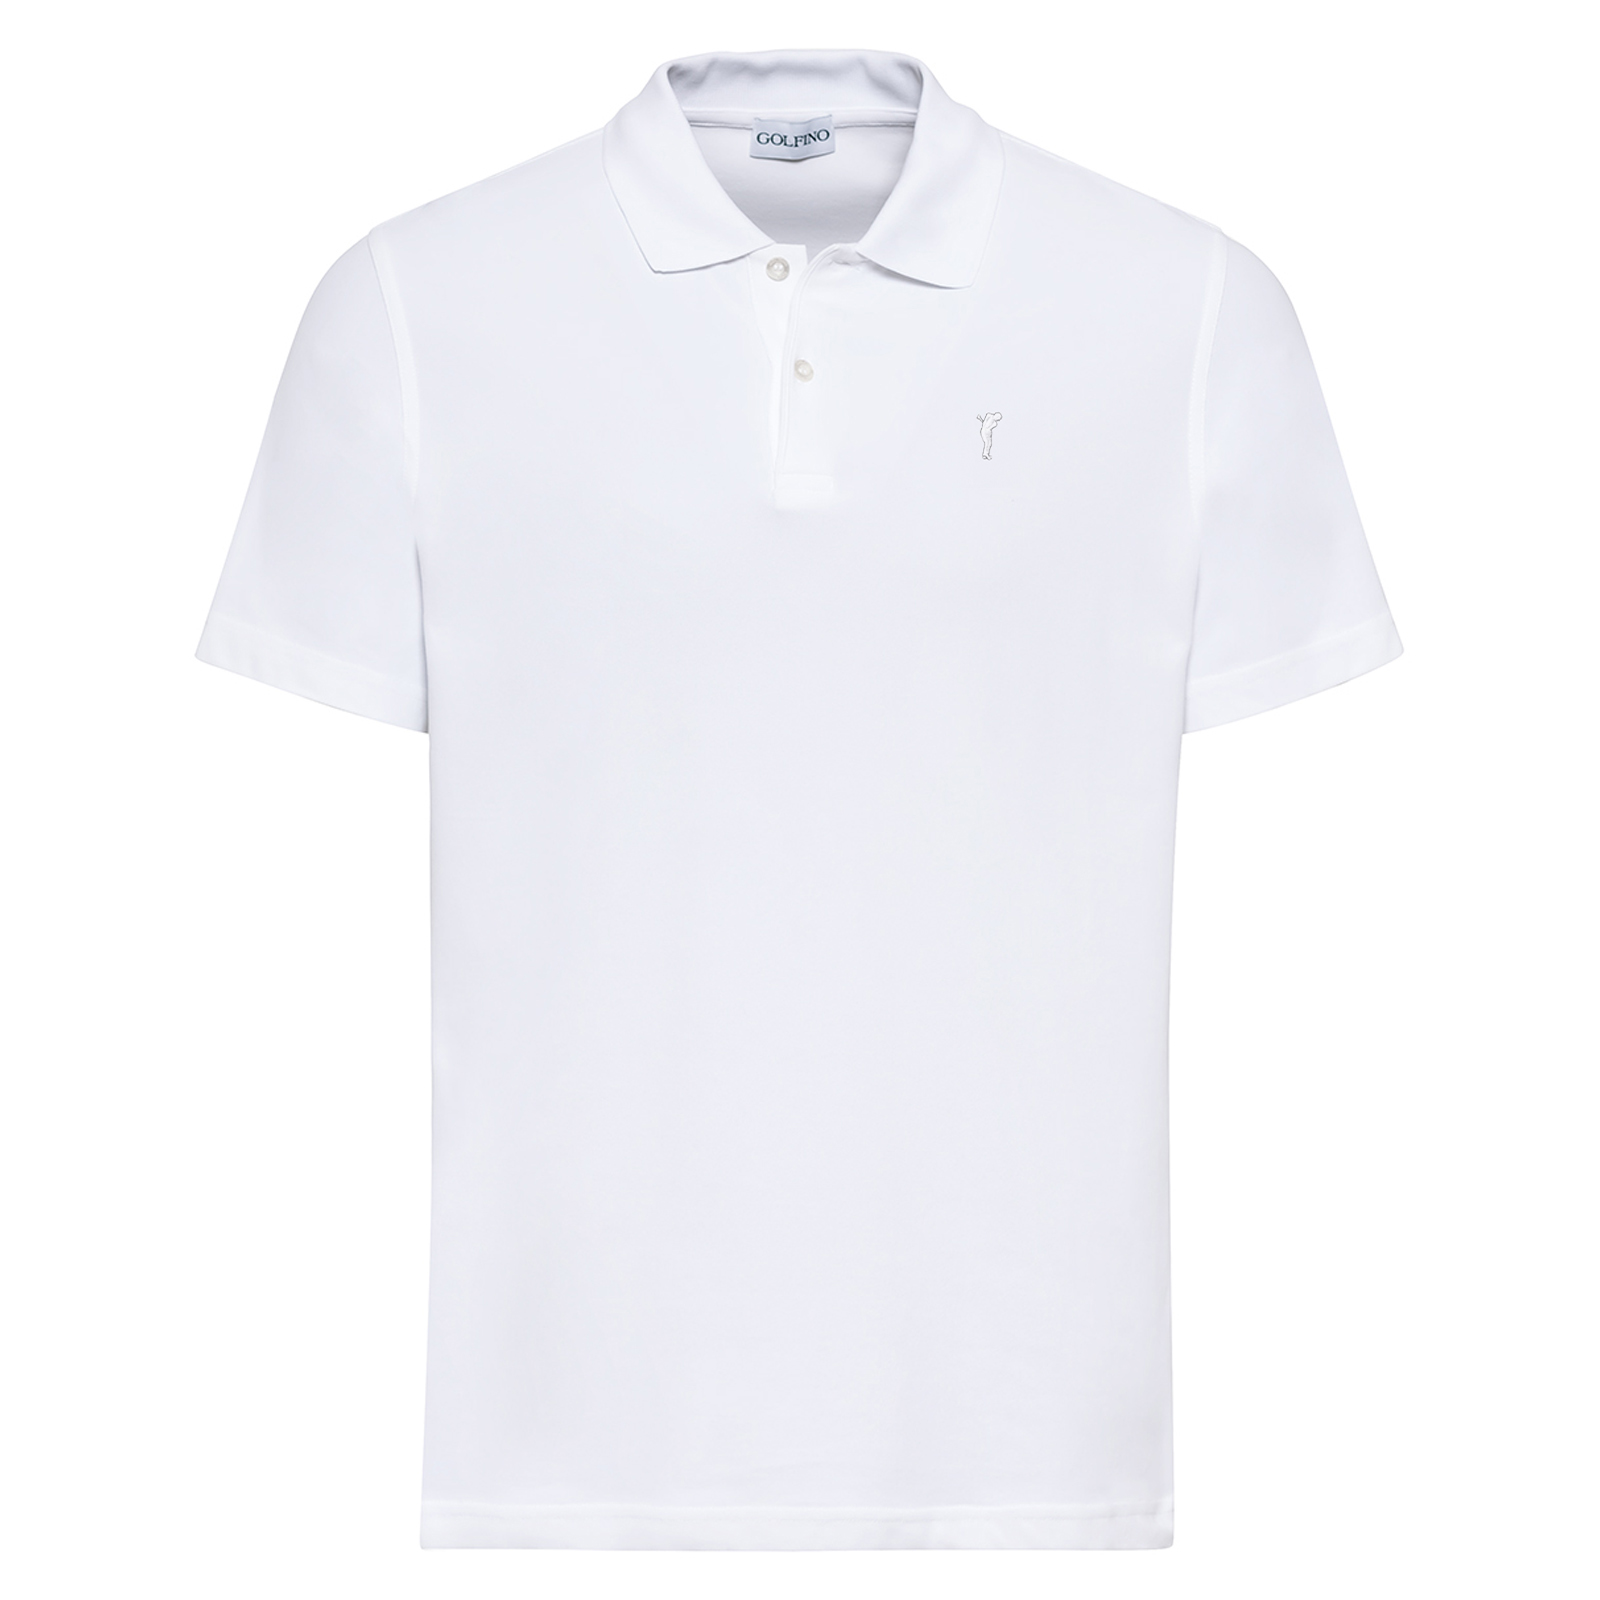 Men's polo shirt made from moisture-regulating material